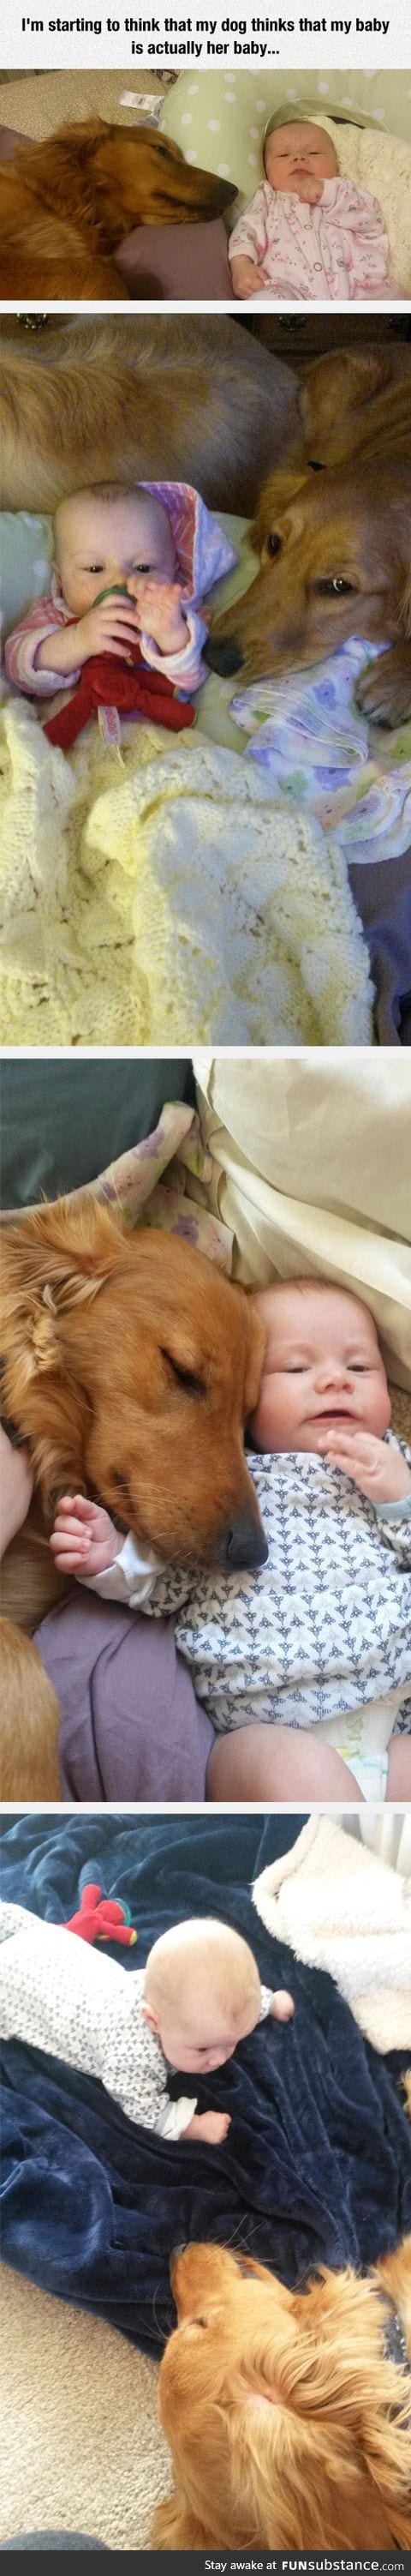 Dogs make good moms